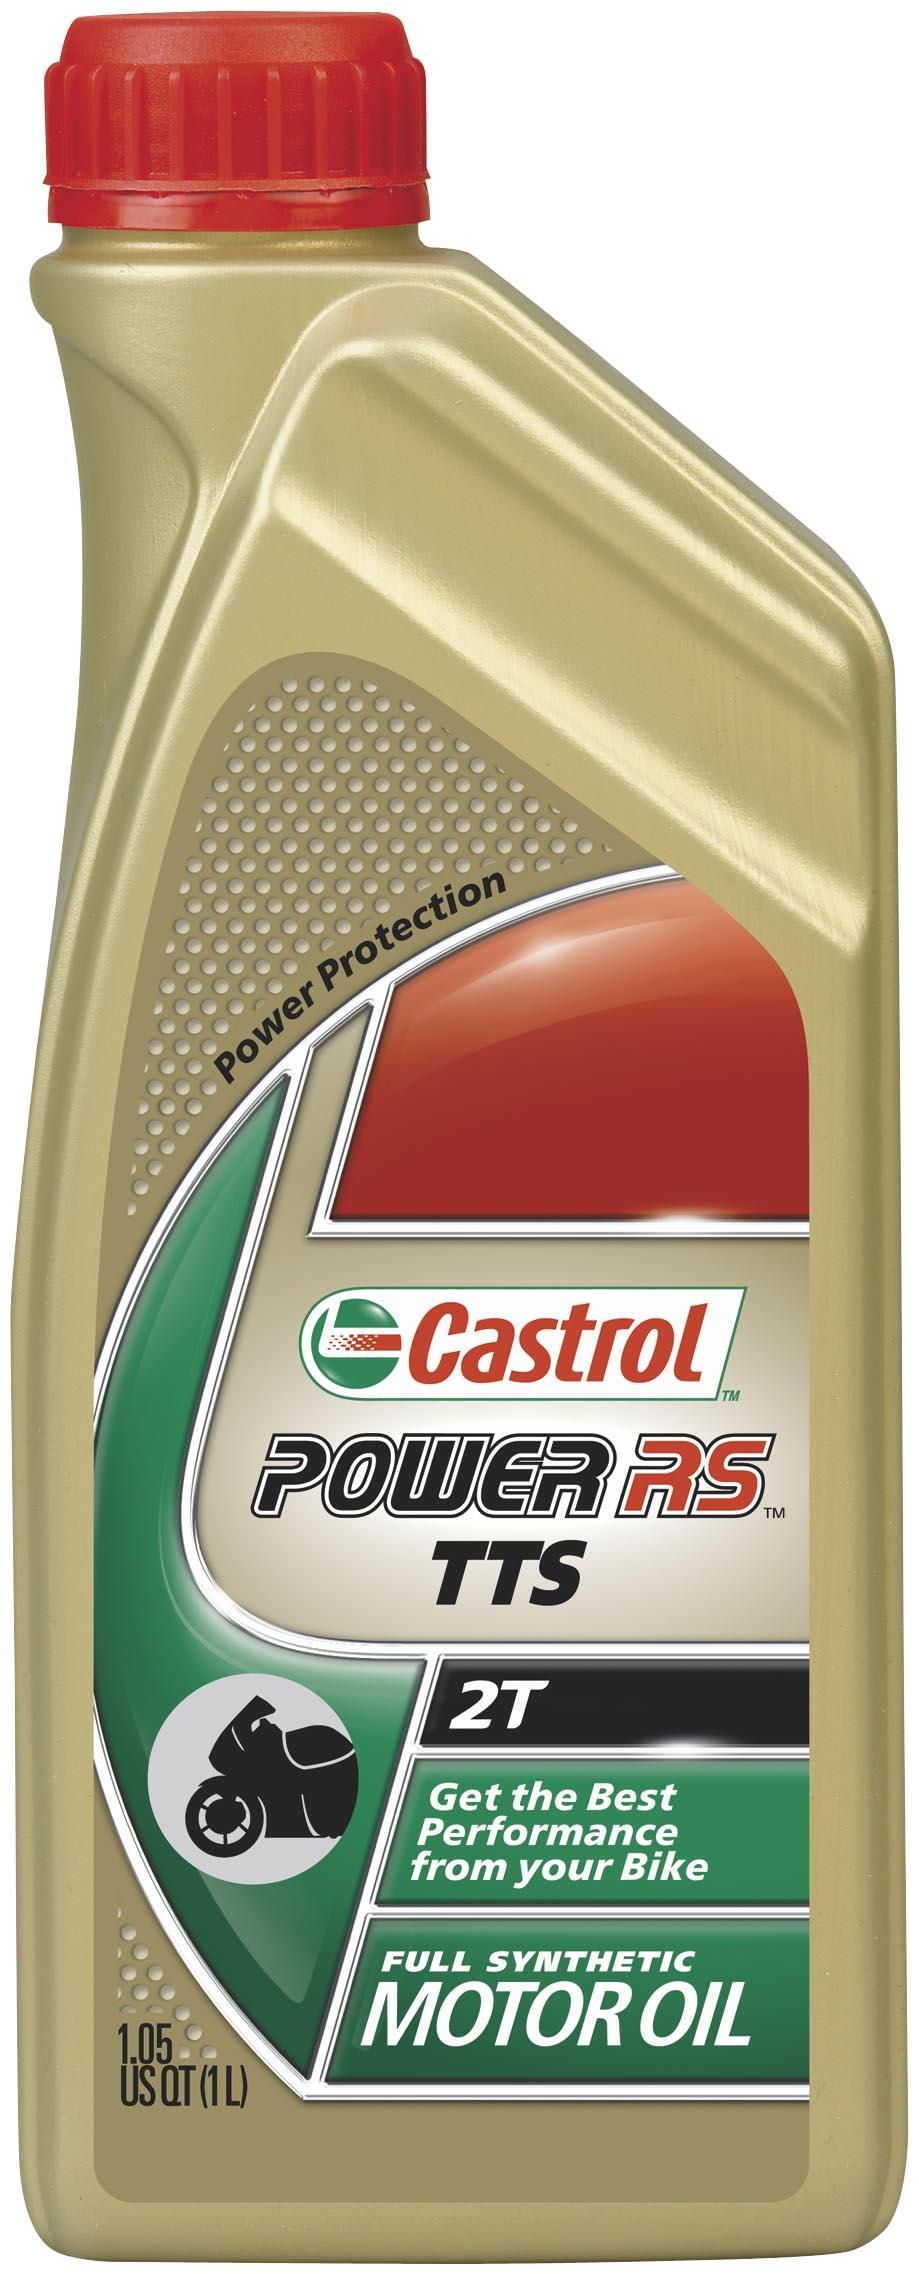 86TH-CASTROL-12899-14DA9B Power RS TTS 2T 100% Synthetic Oil - 1L.